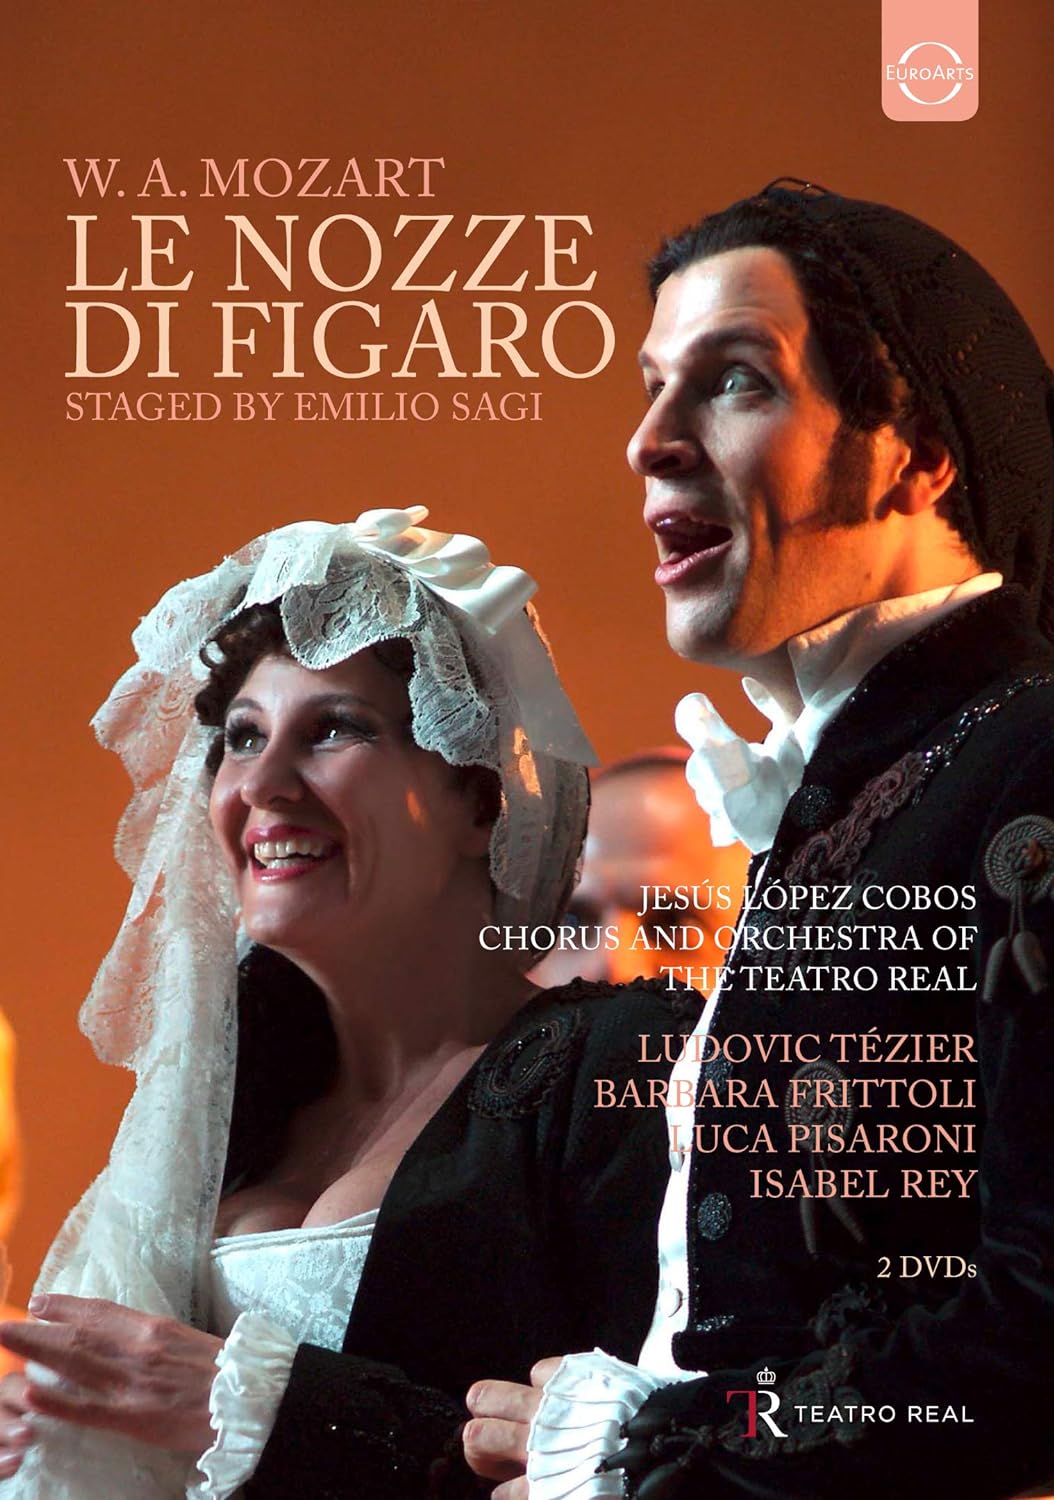 Mozart: Le Nozze di Figaro (DVD) | Ludovic Tezier, Barbara Frittoli, Luca Pisaroni, Isabel Rey, Jeannette Fischer, Orchestra Teatro Real Madrid, Jesus Lopez Cobos